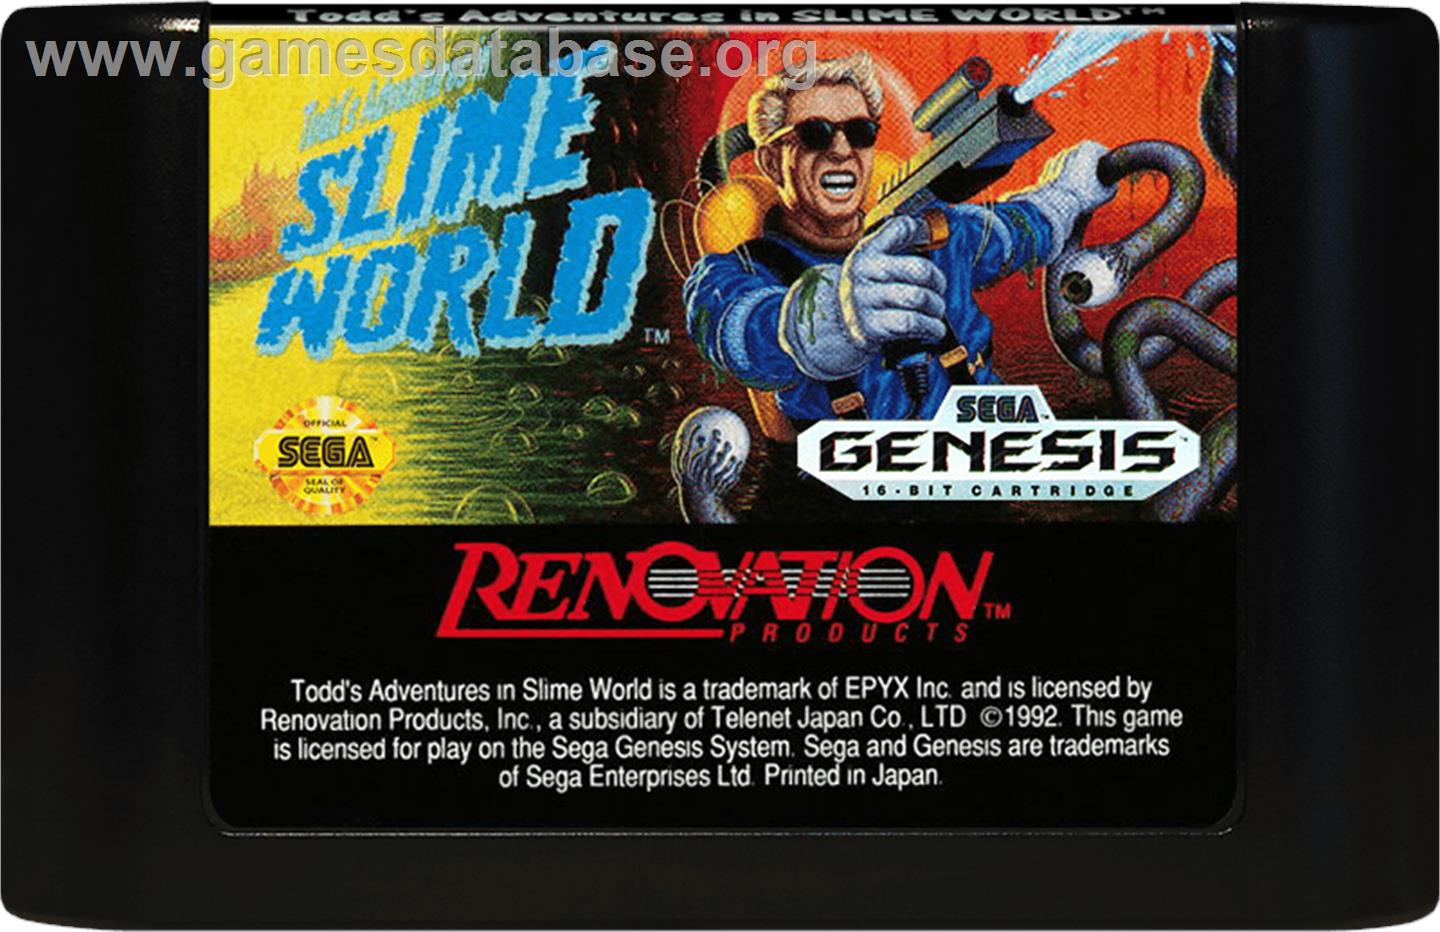 Todd's Adventures in Slime World - Sega Genesis - Artwork - Cartridge